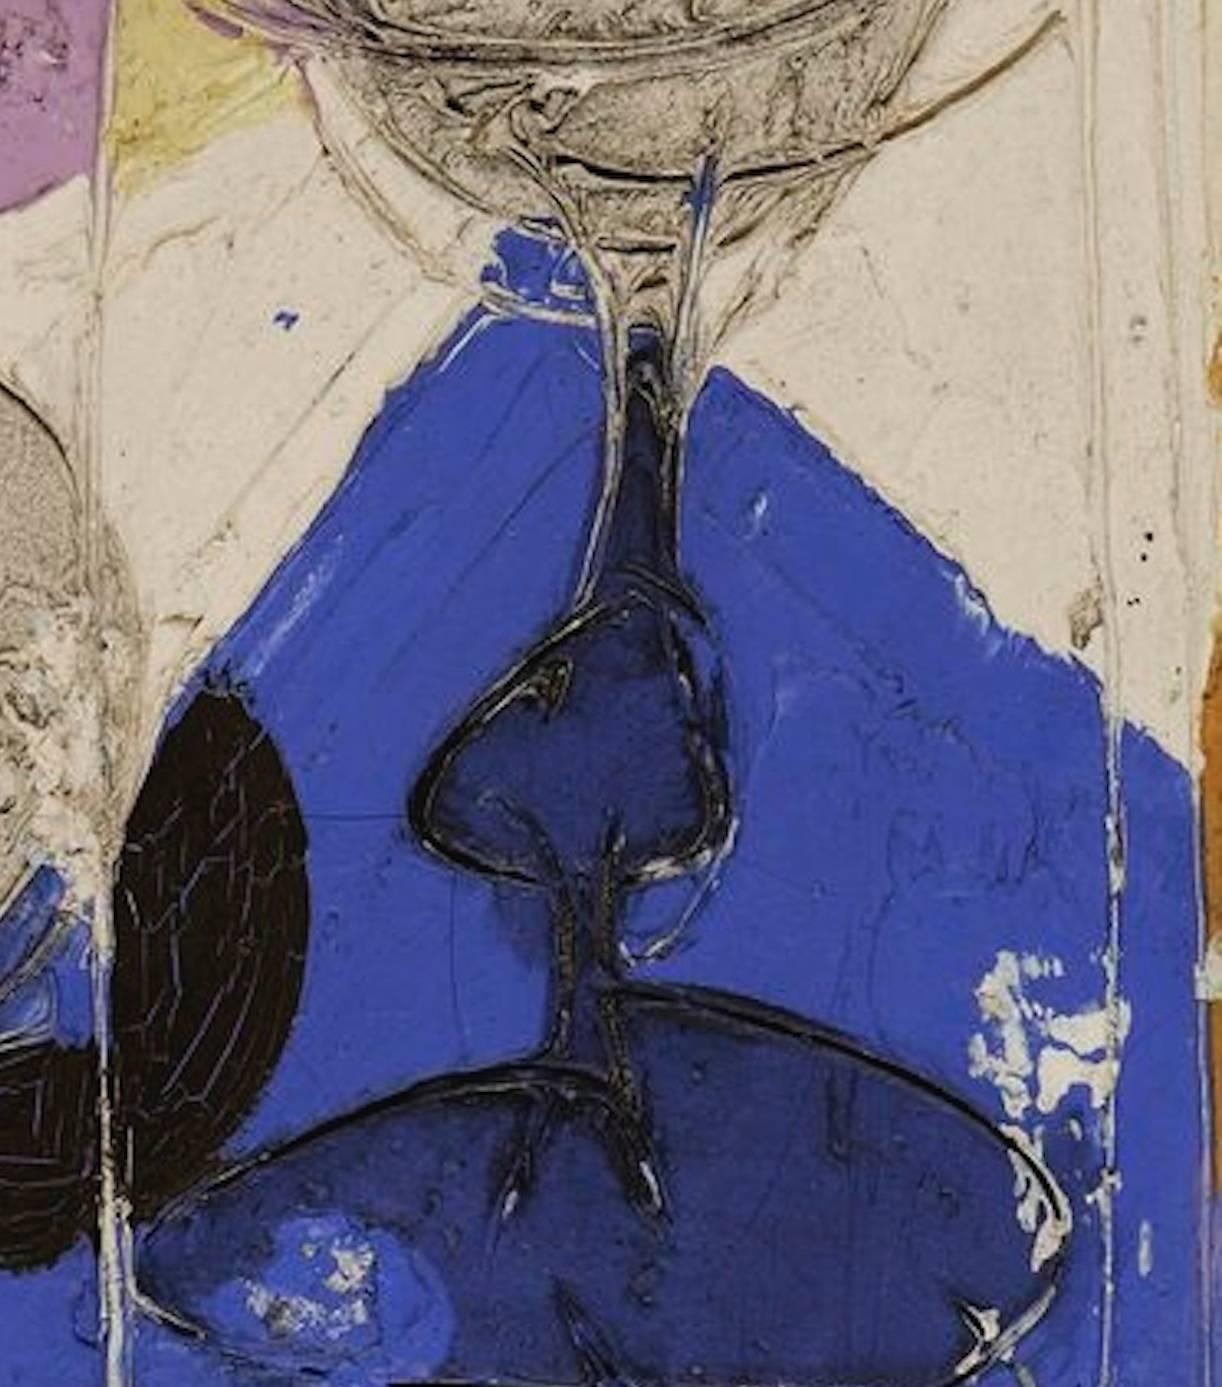 Verre de Vin - Abstract Painting by Claude Vénard